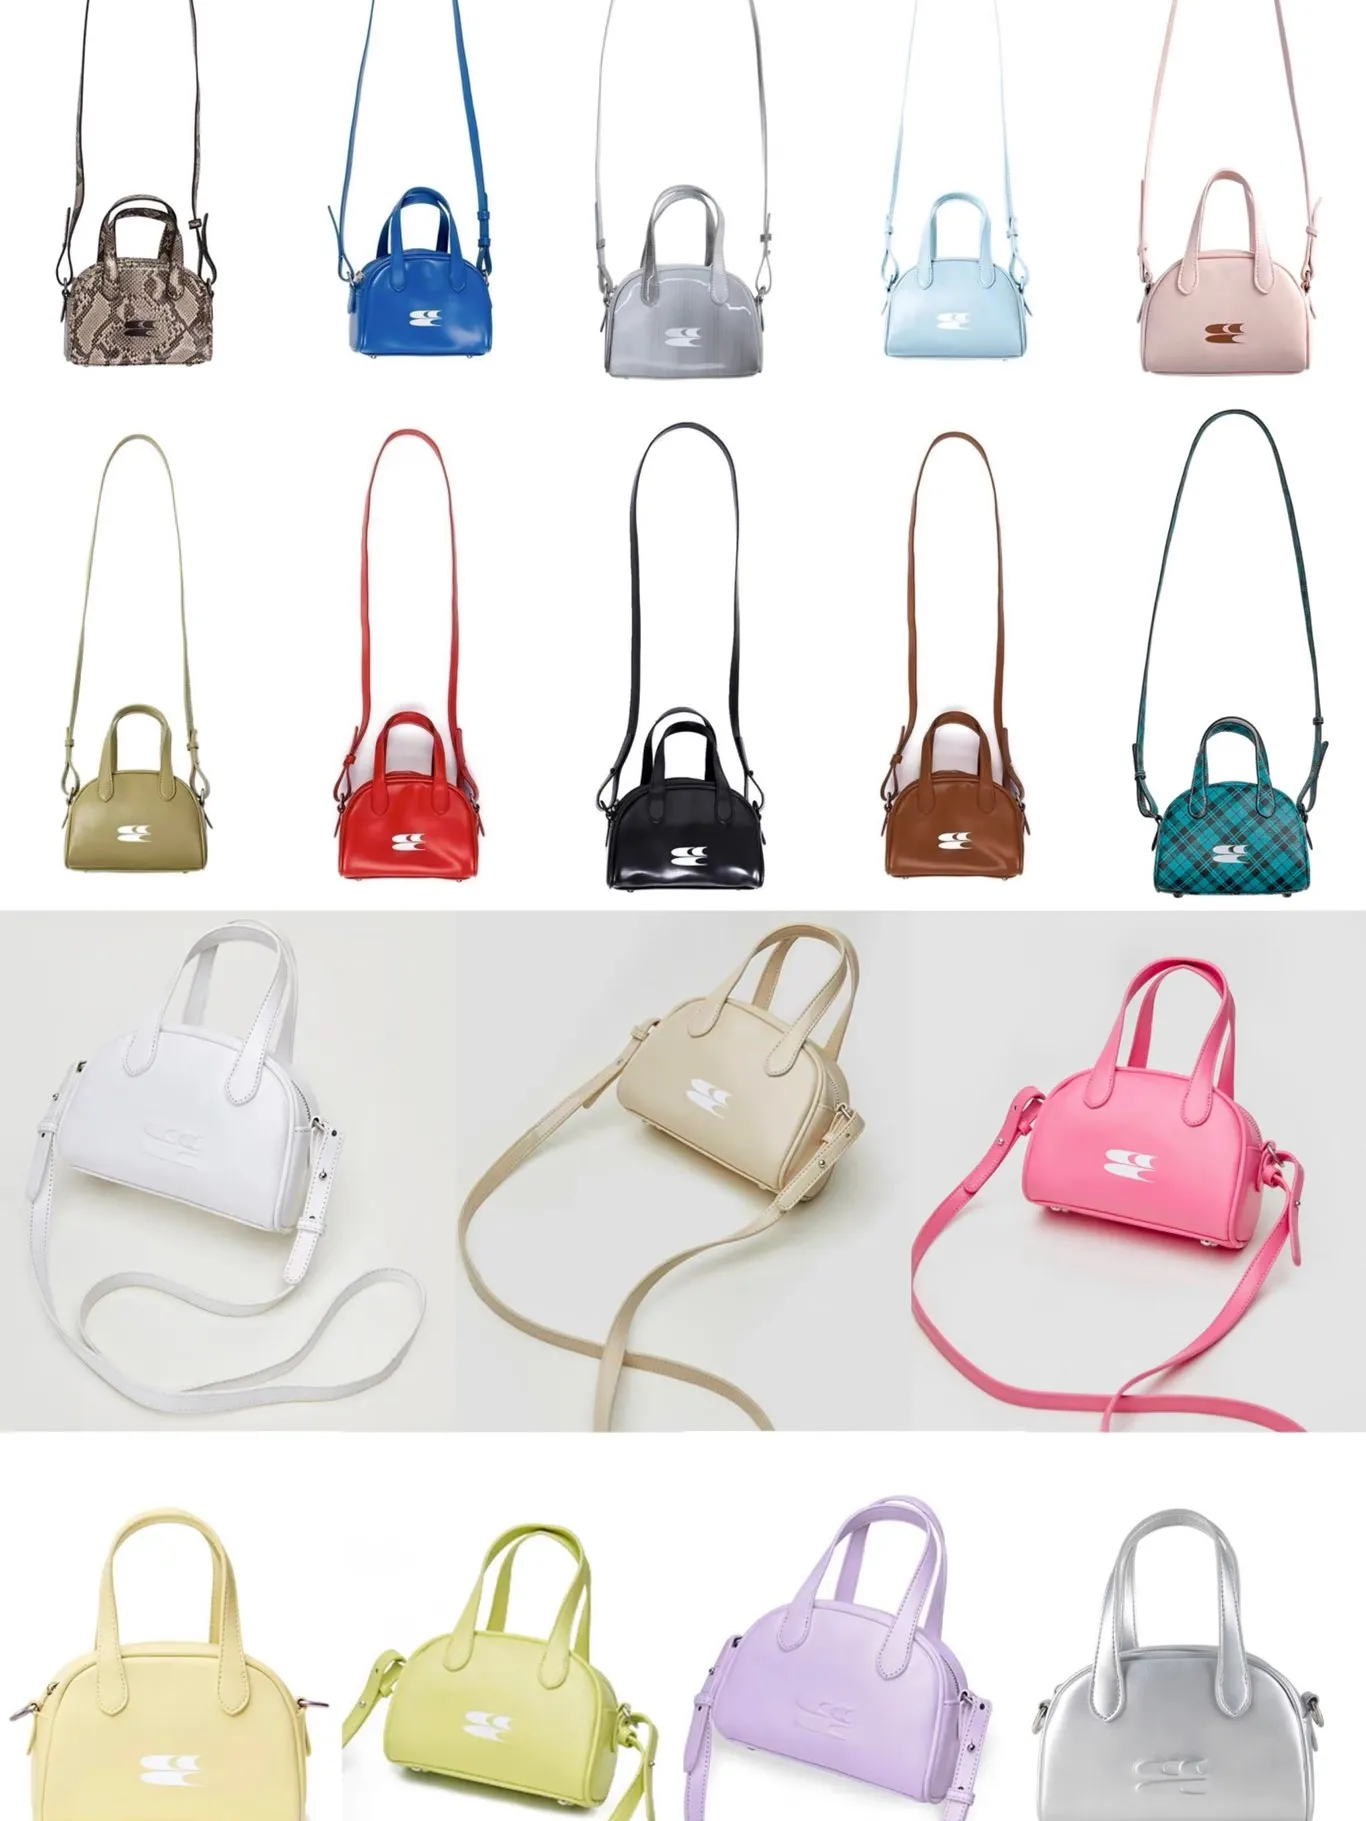 My little collection 🫶🏻 plus, help me decide 🤔 : r/handbags